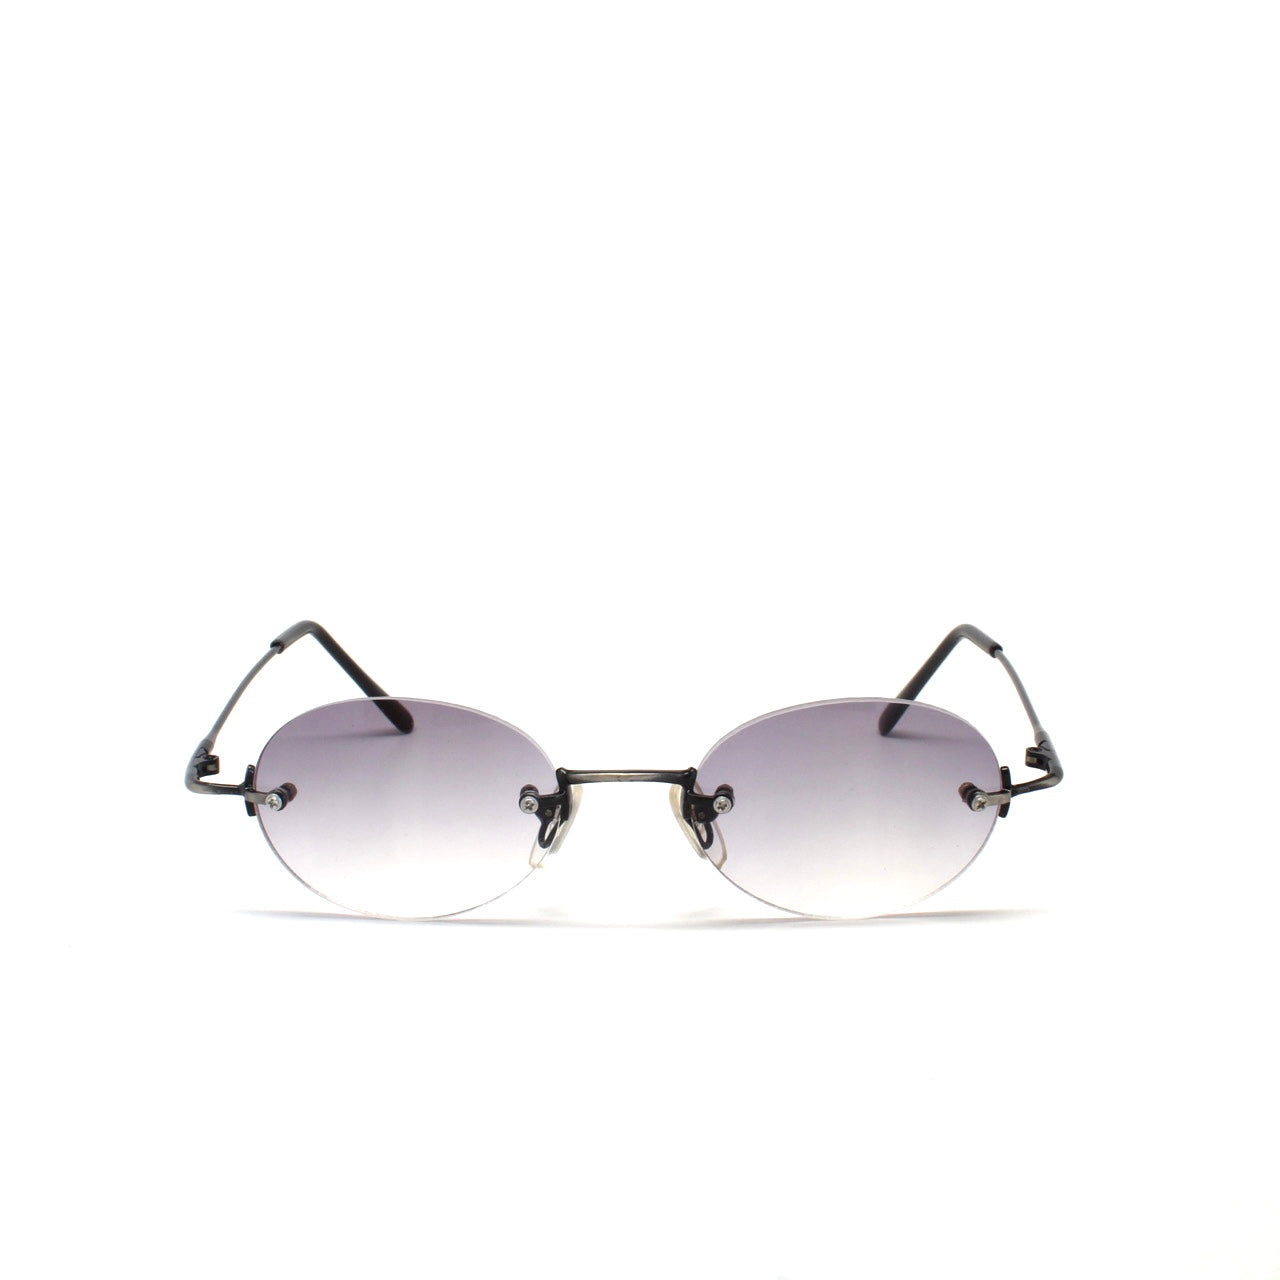 Vintage Small Size 1998 Rimless Oval Sunglasses - Black